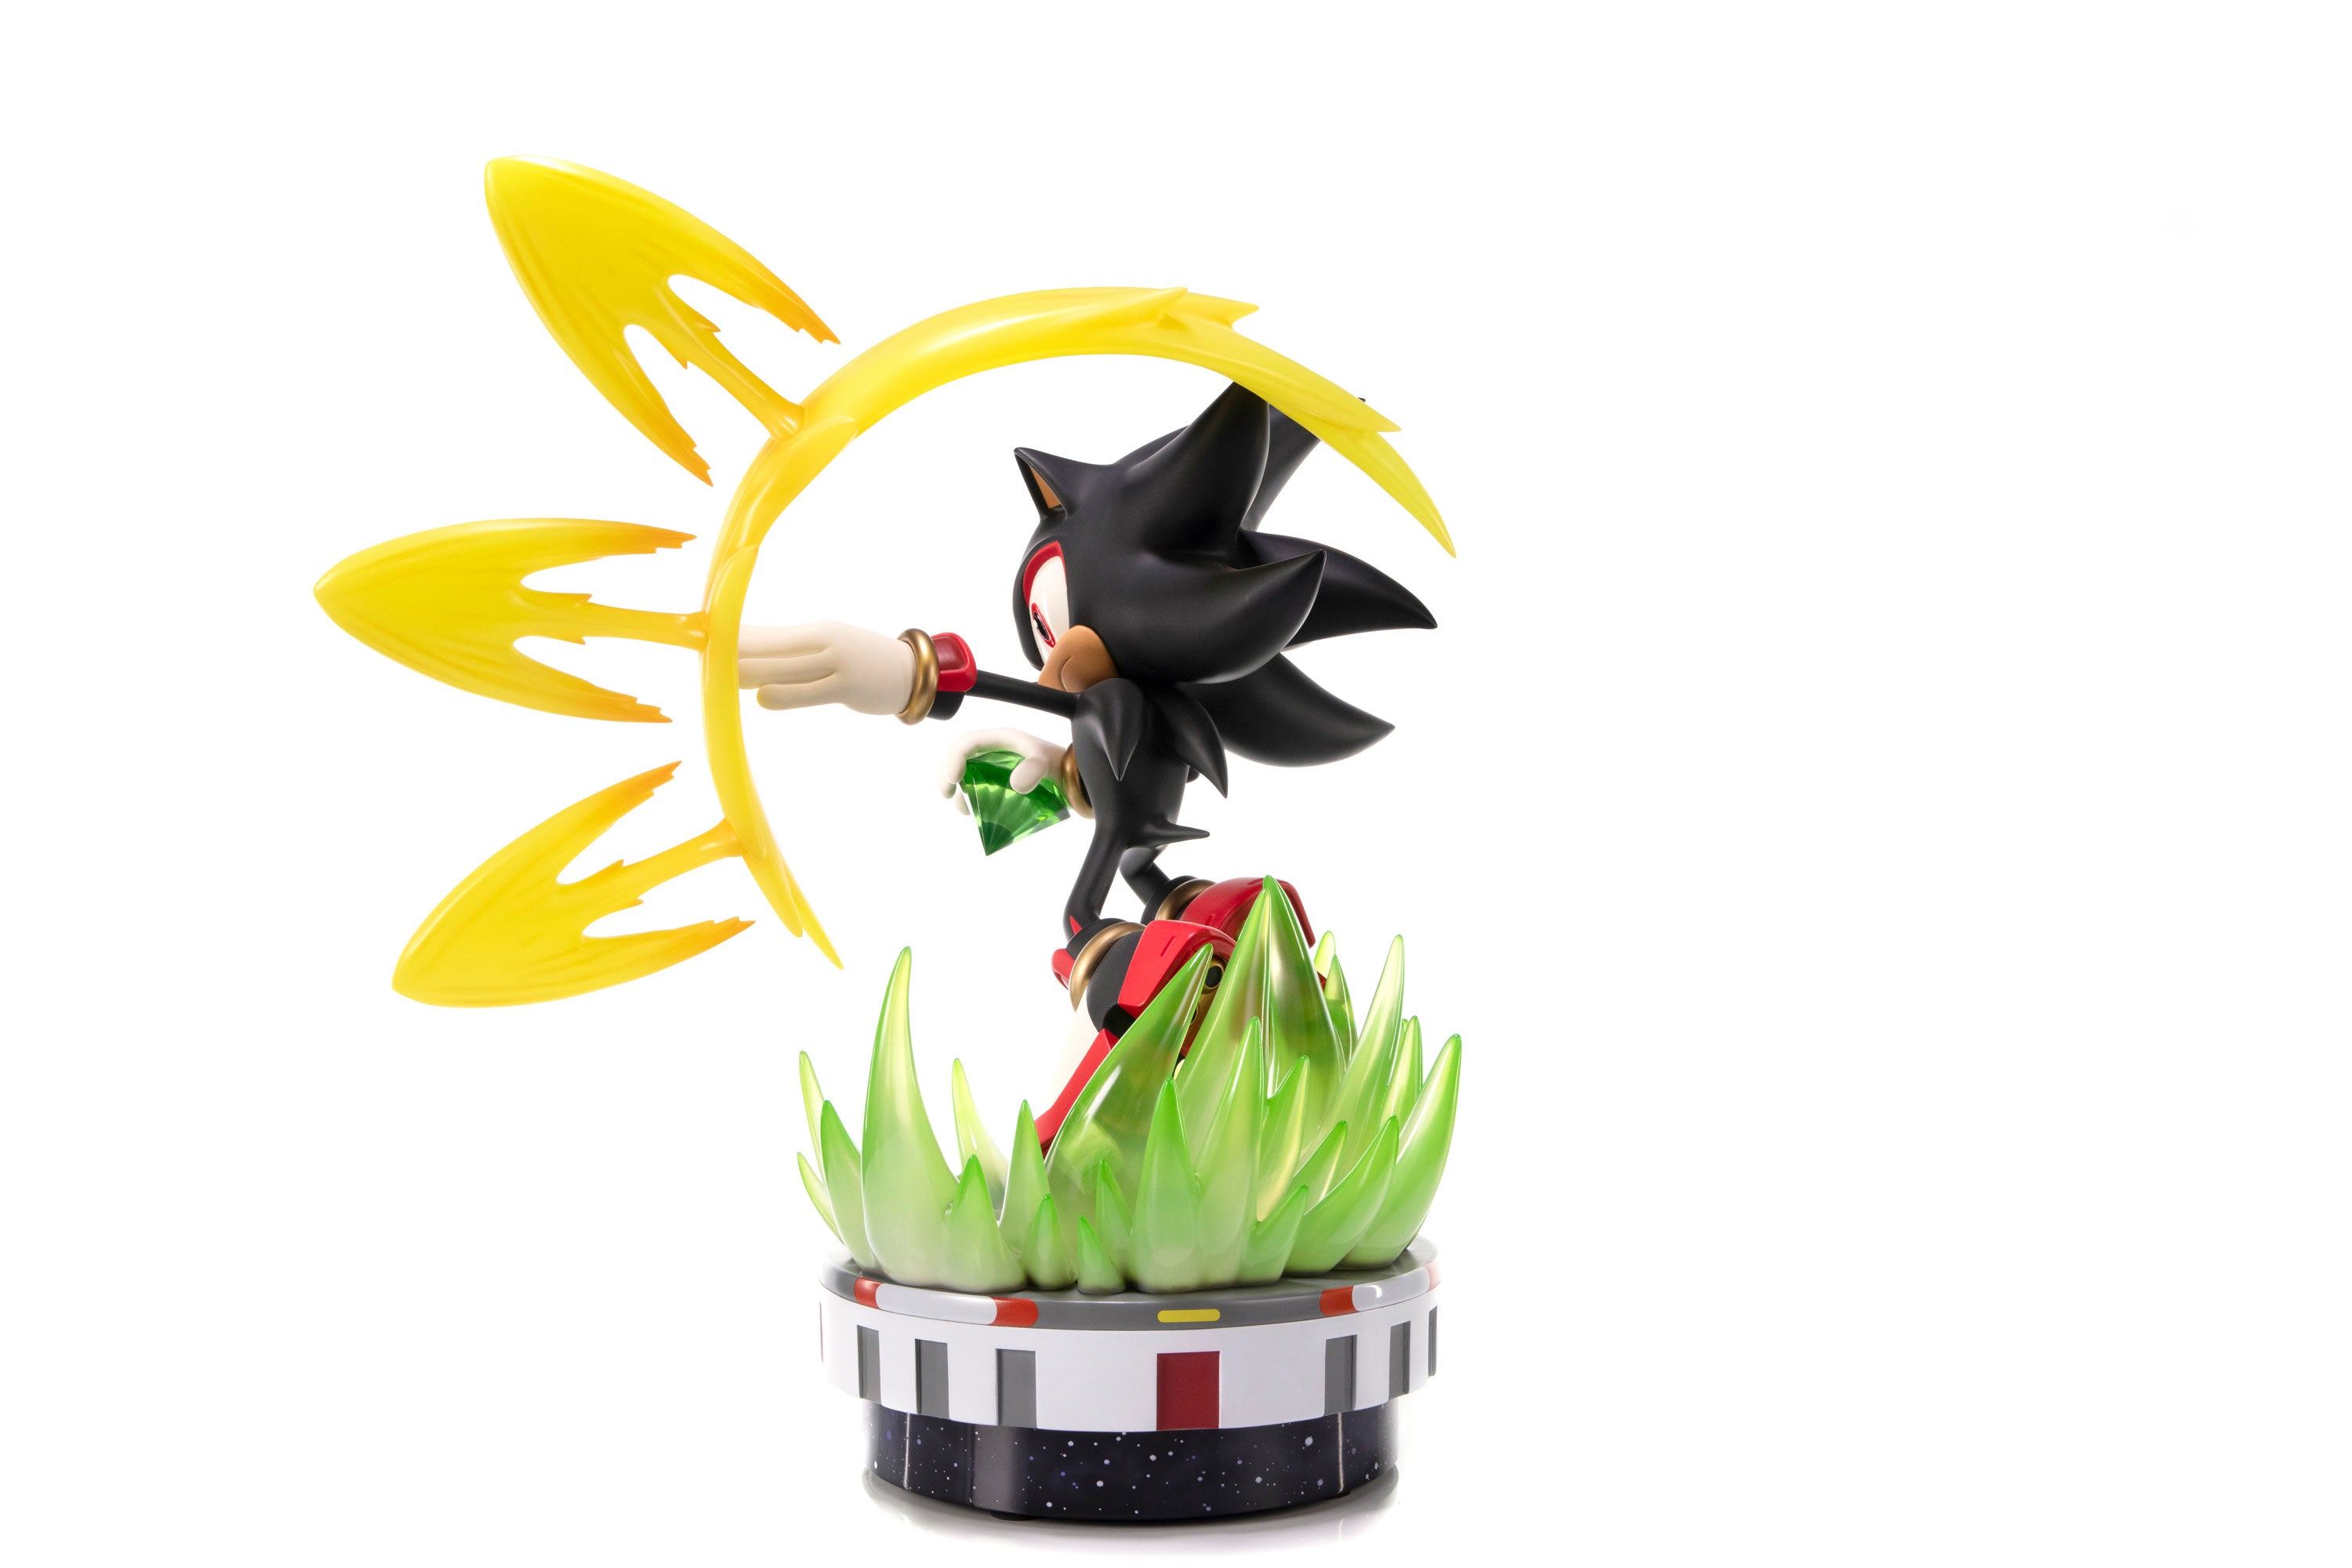 First 4 Figures Sonic the Hedgehog: Shadow Chaos Control Edicion Estandar 19.6 Pulgadas